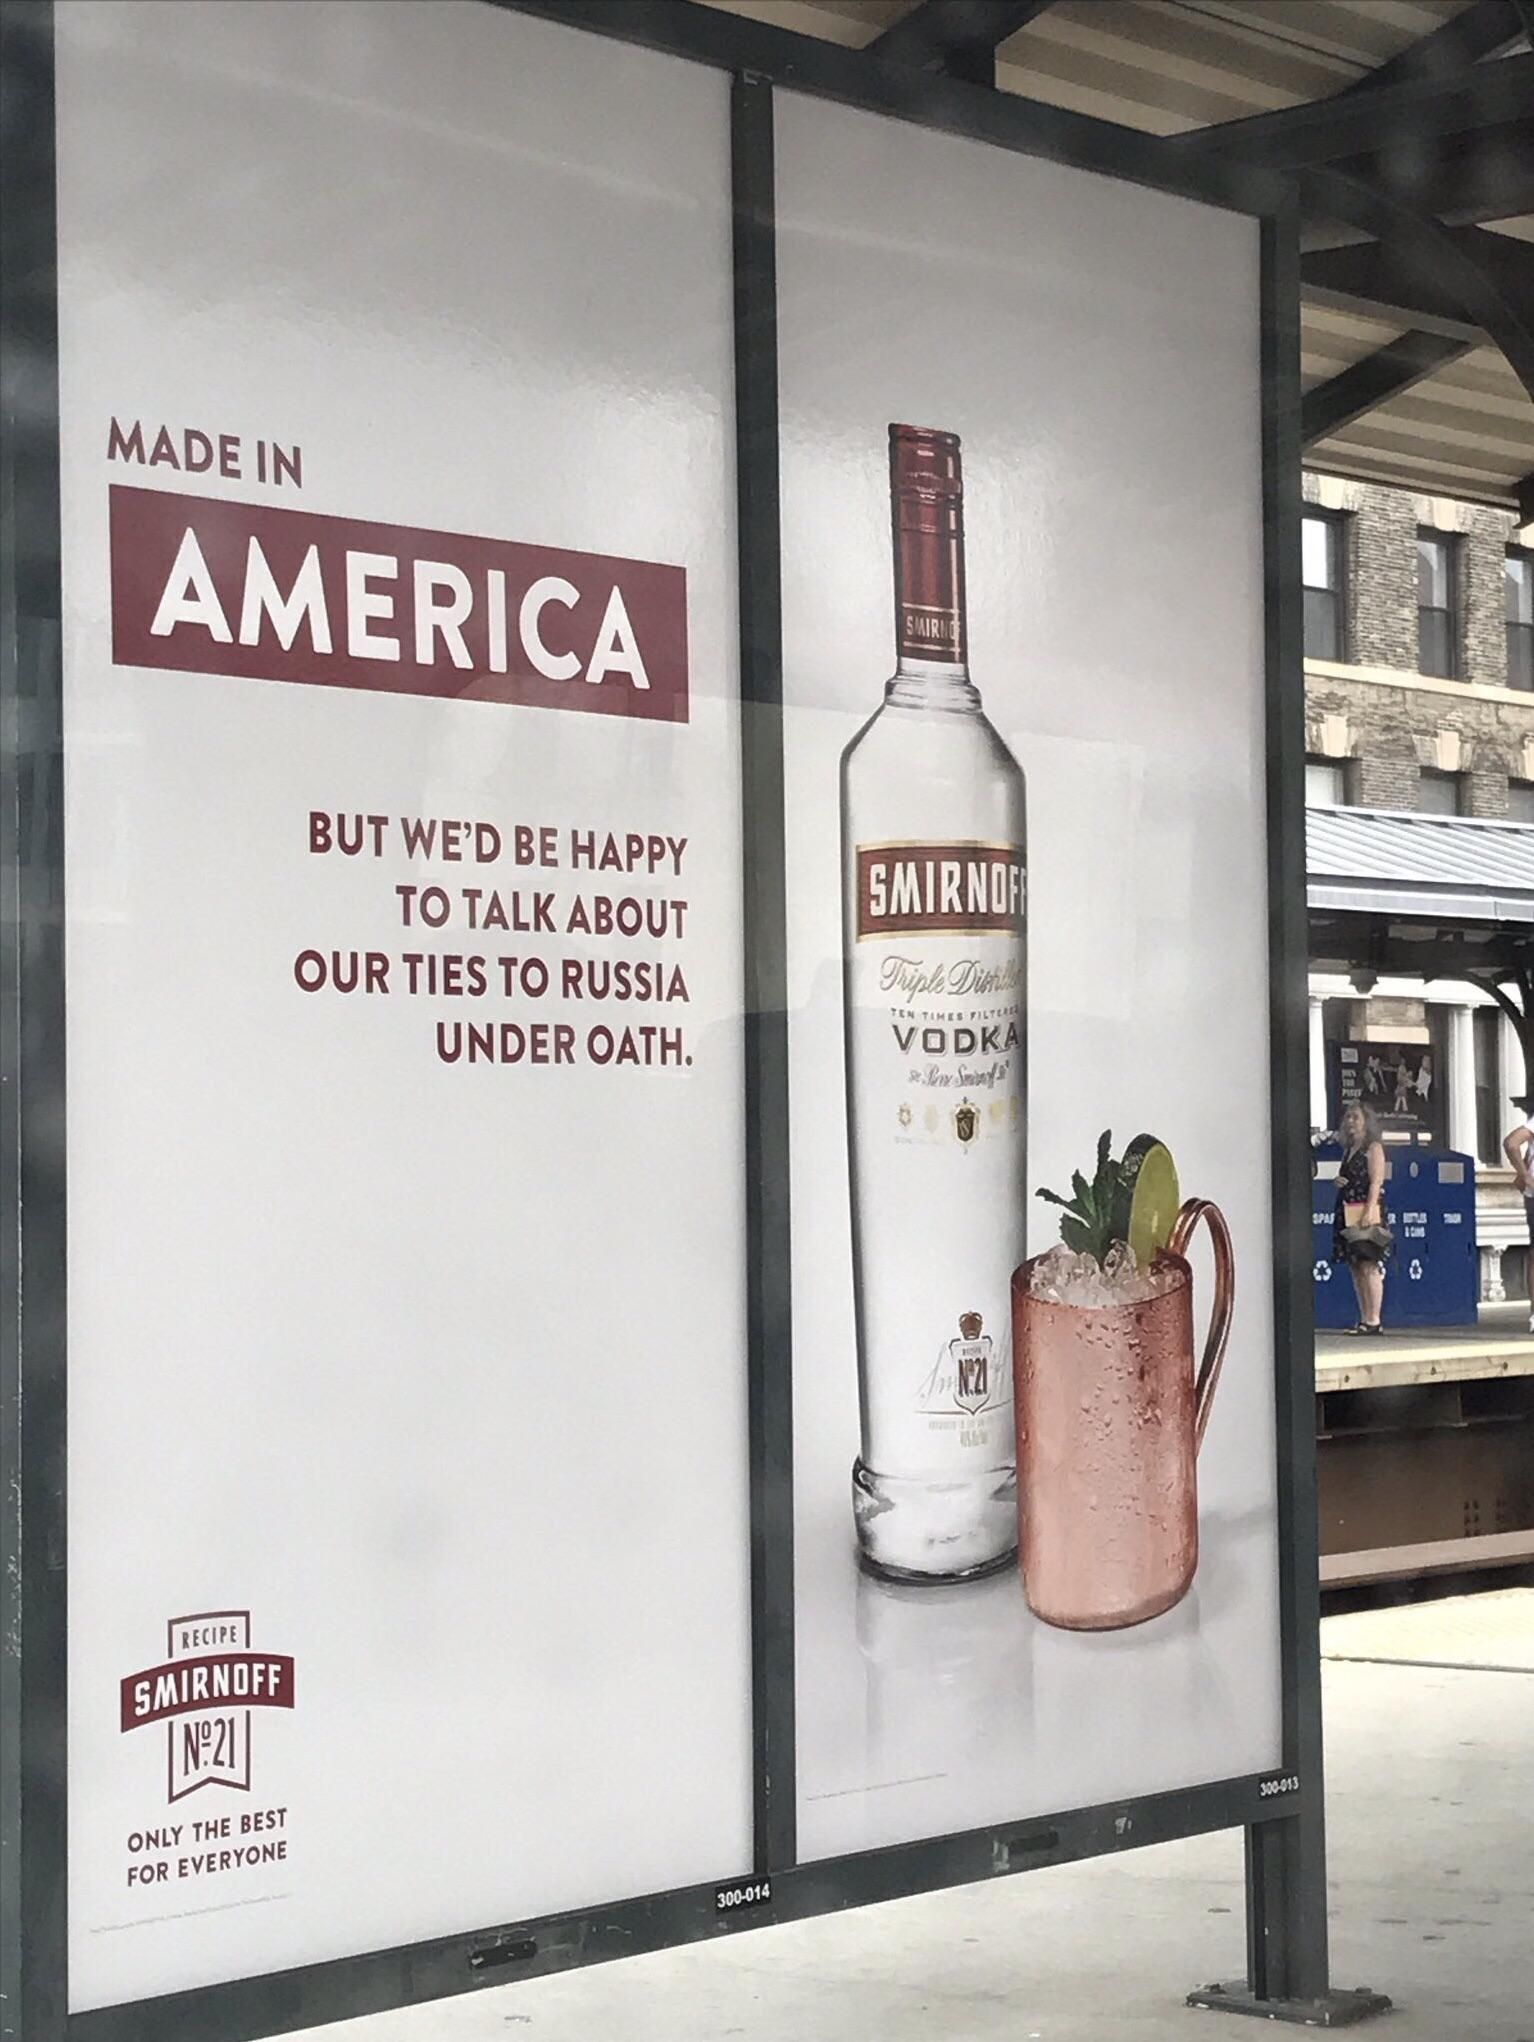 This Smirnoff Advertisement